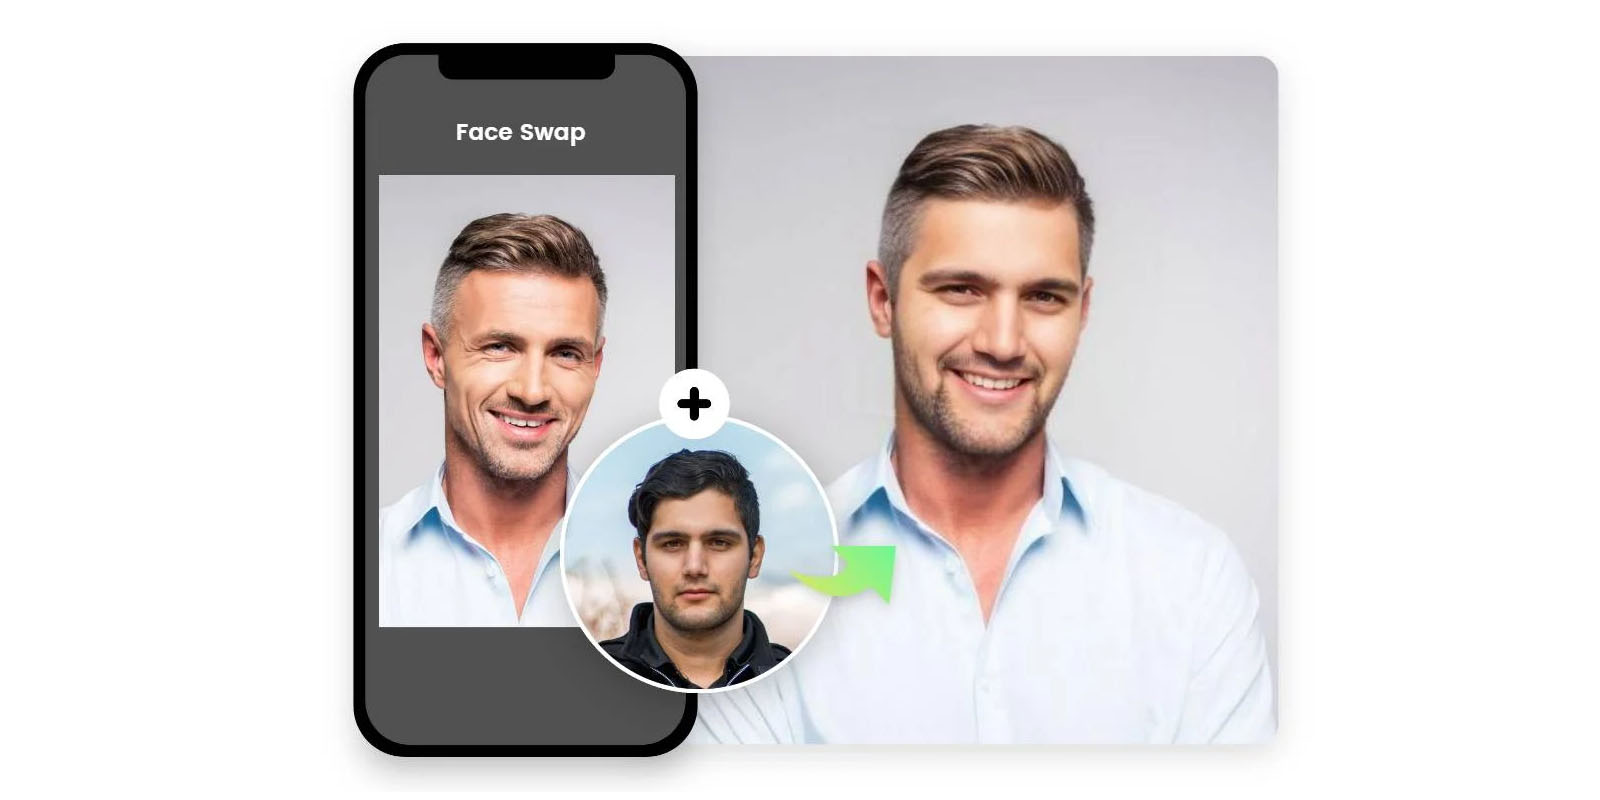 Romance scam with face-swap | Face swap app promo image